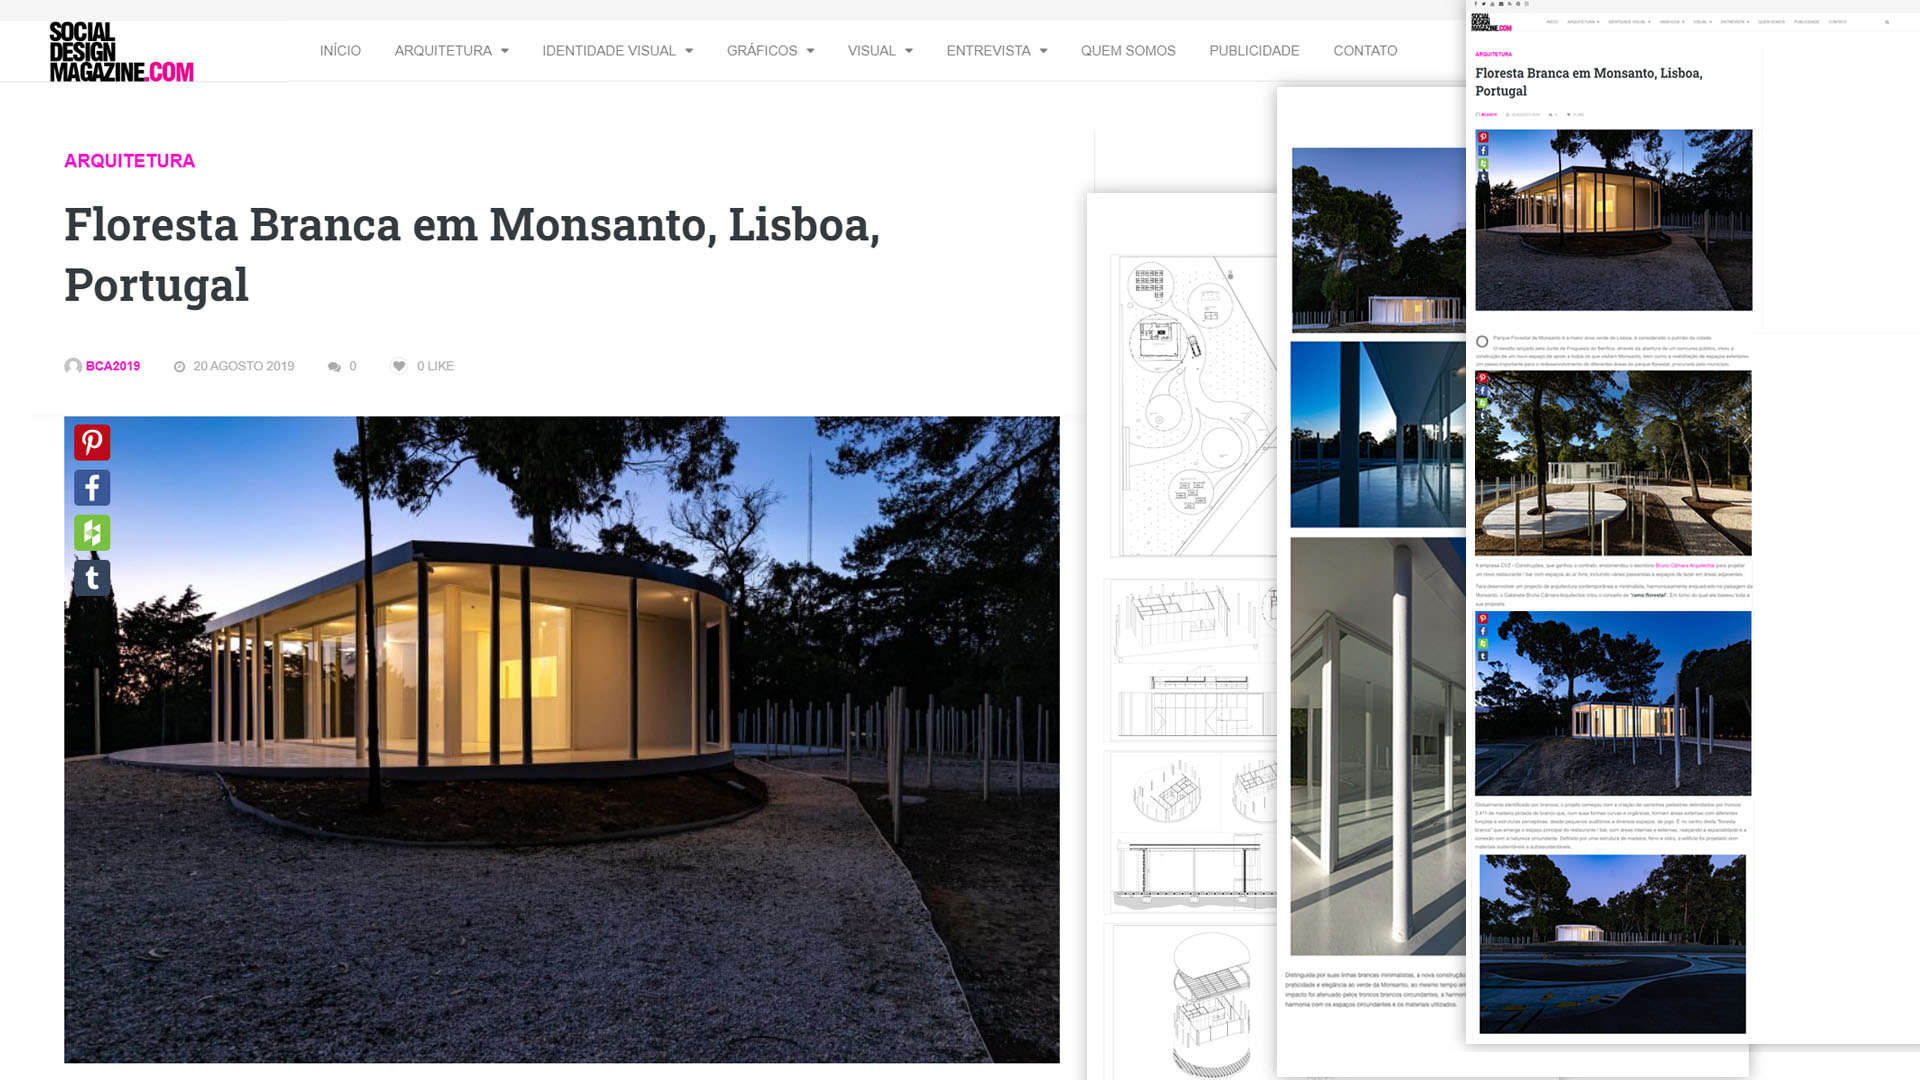 Social Design Magazine Architecture project White forest, Monsanto